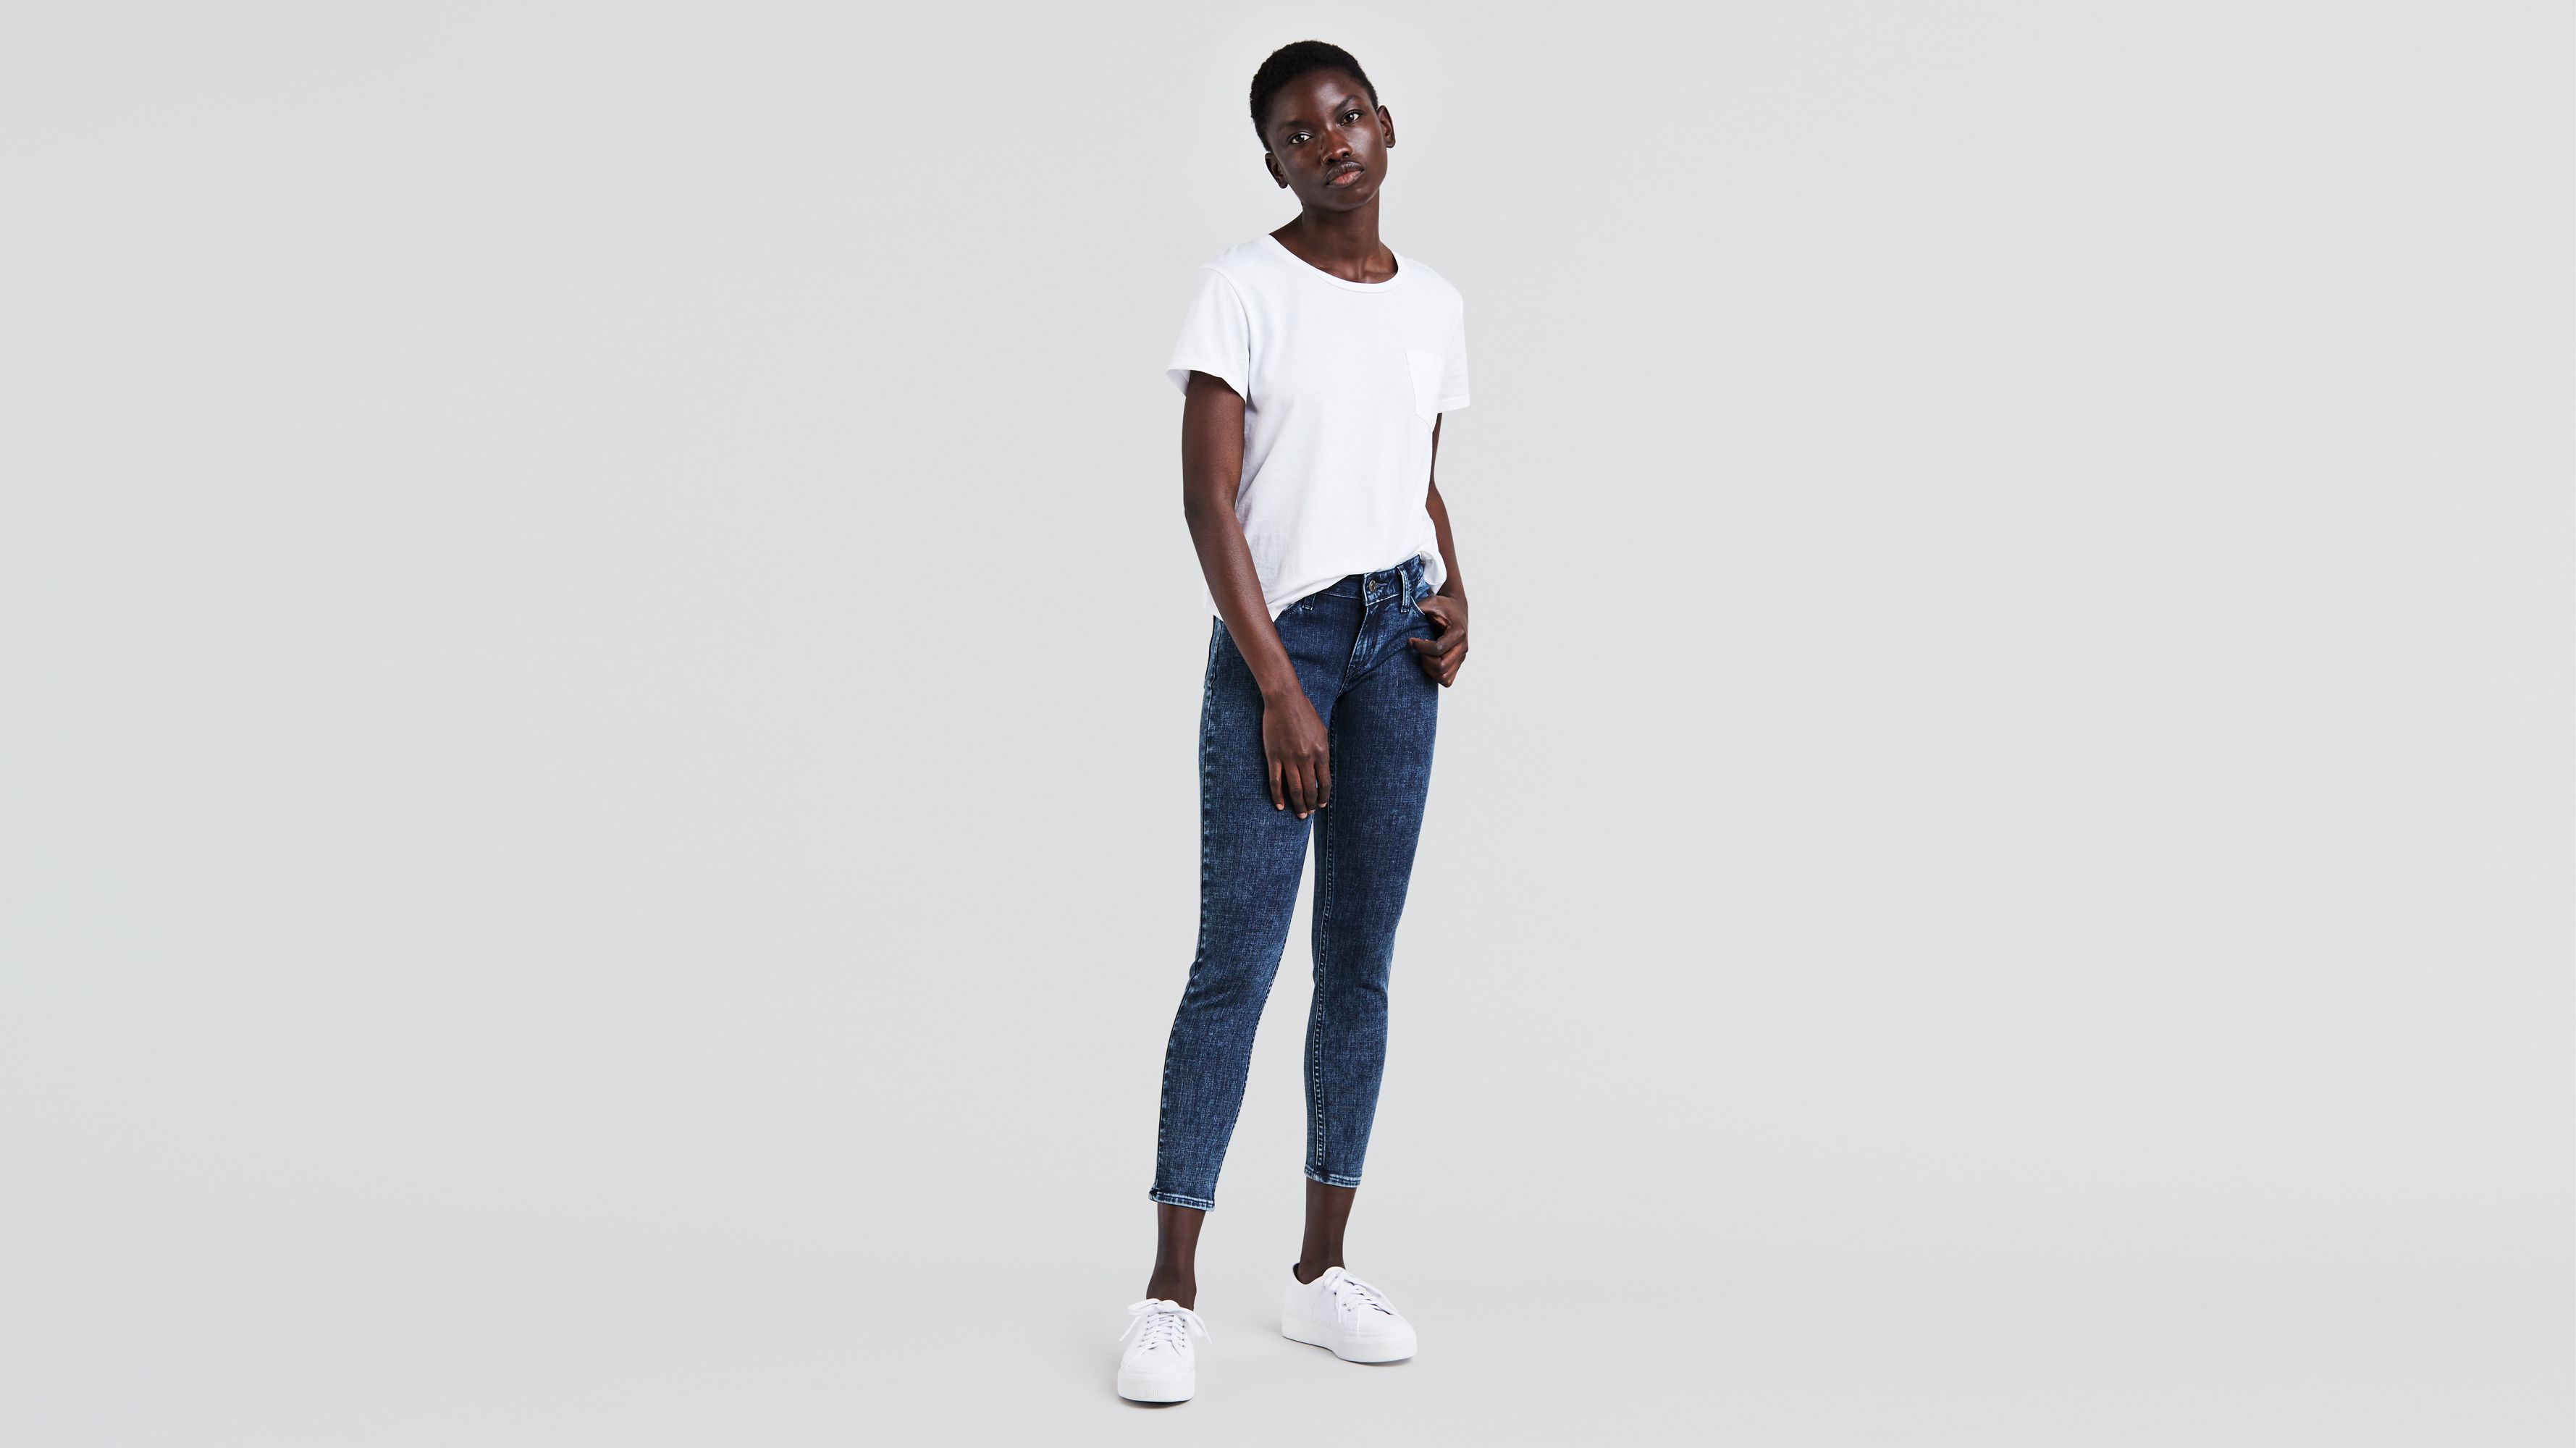 levi's 535 super skinny womens jeans